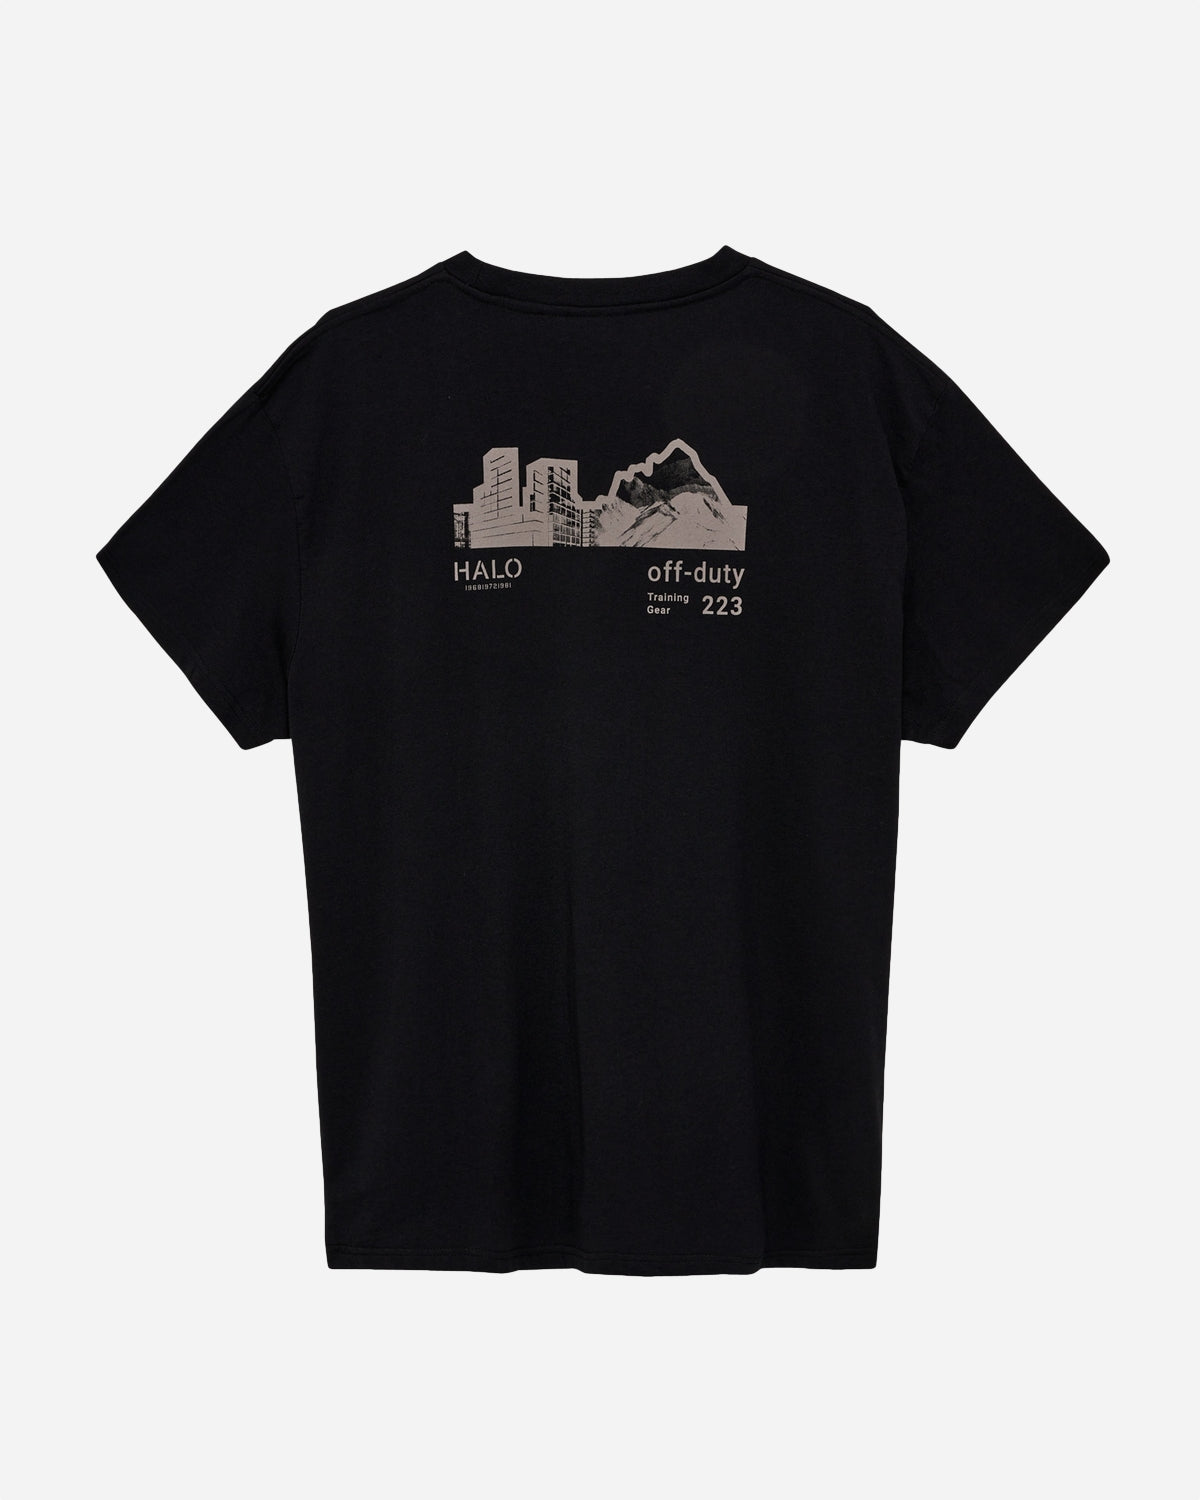 HALO Offduty T-Shirt - Black